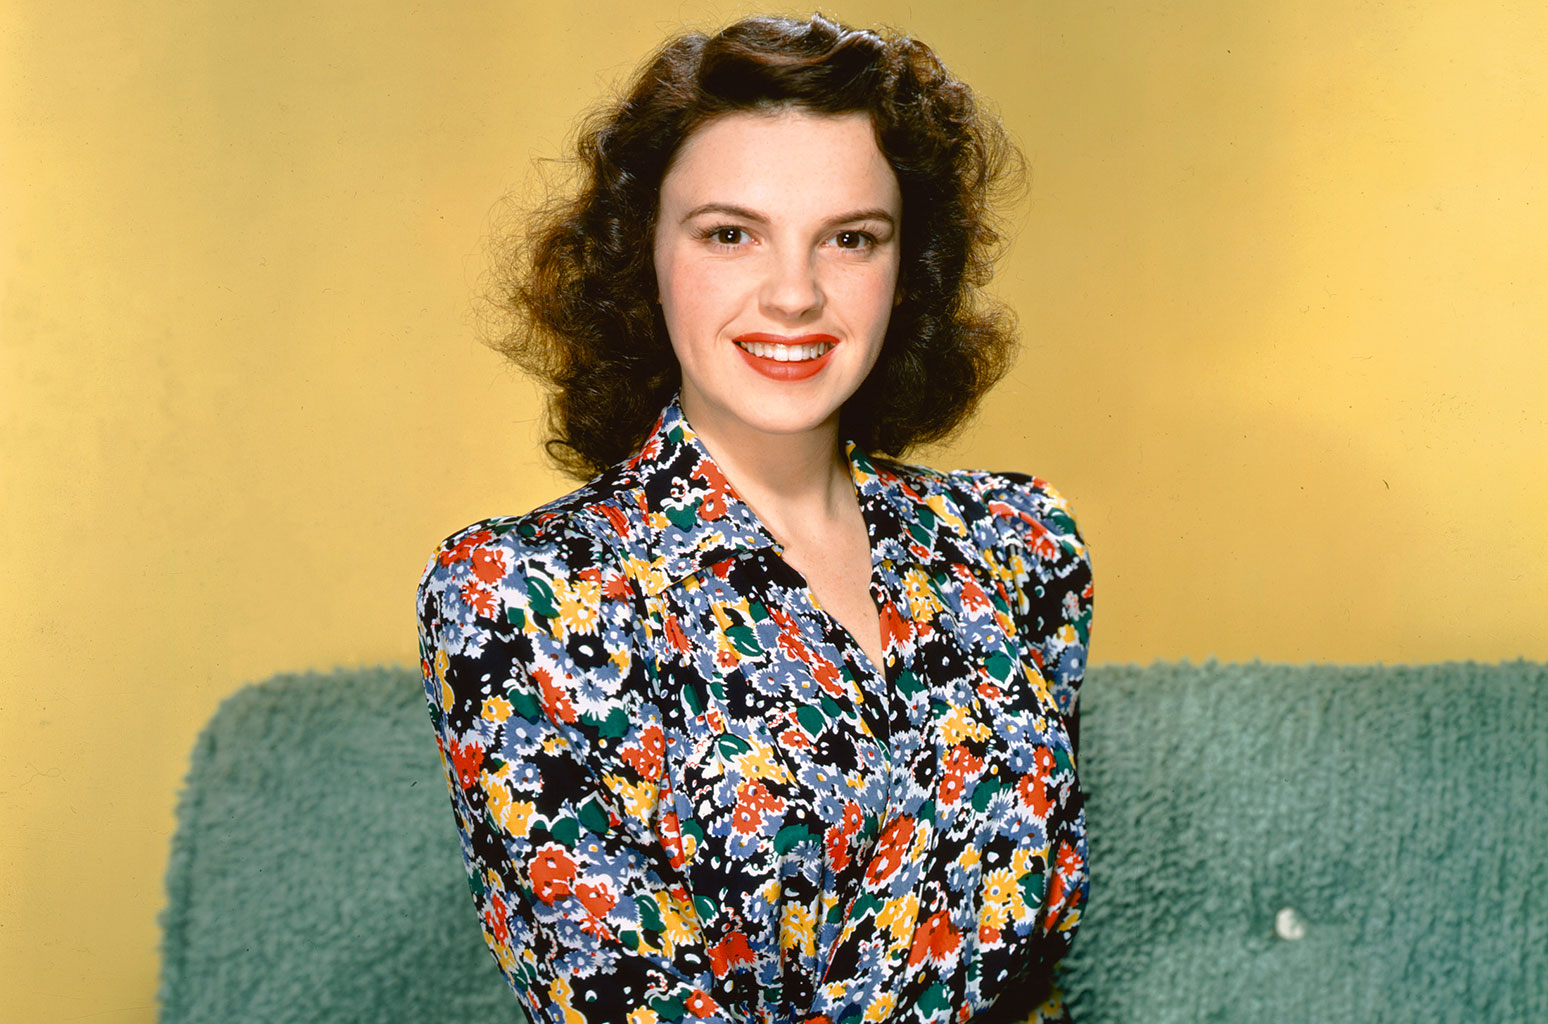 Judy Garland Earns First Top 10 on a Billboard Chart Since 1945 With 'The Man That Got Away' - www.billboard.com - Santa Fe